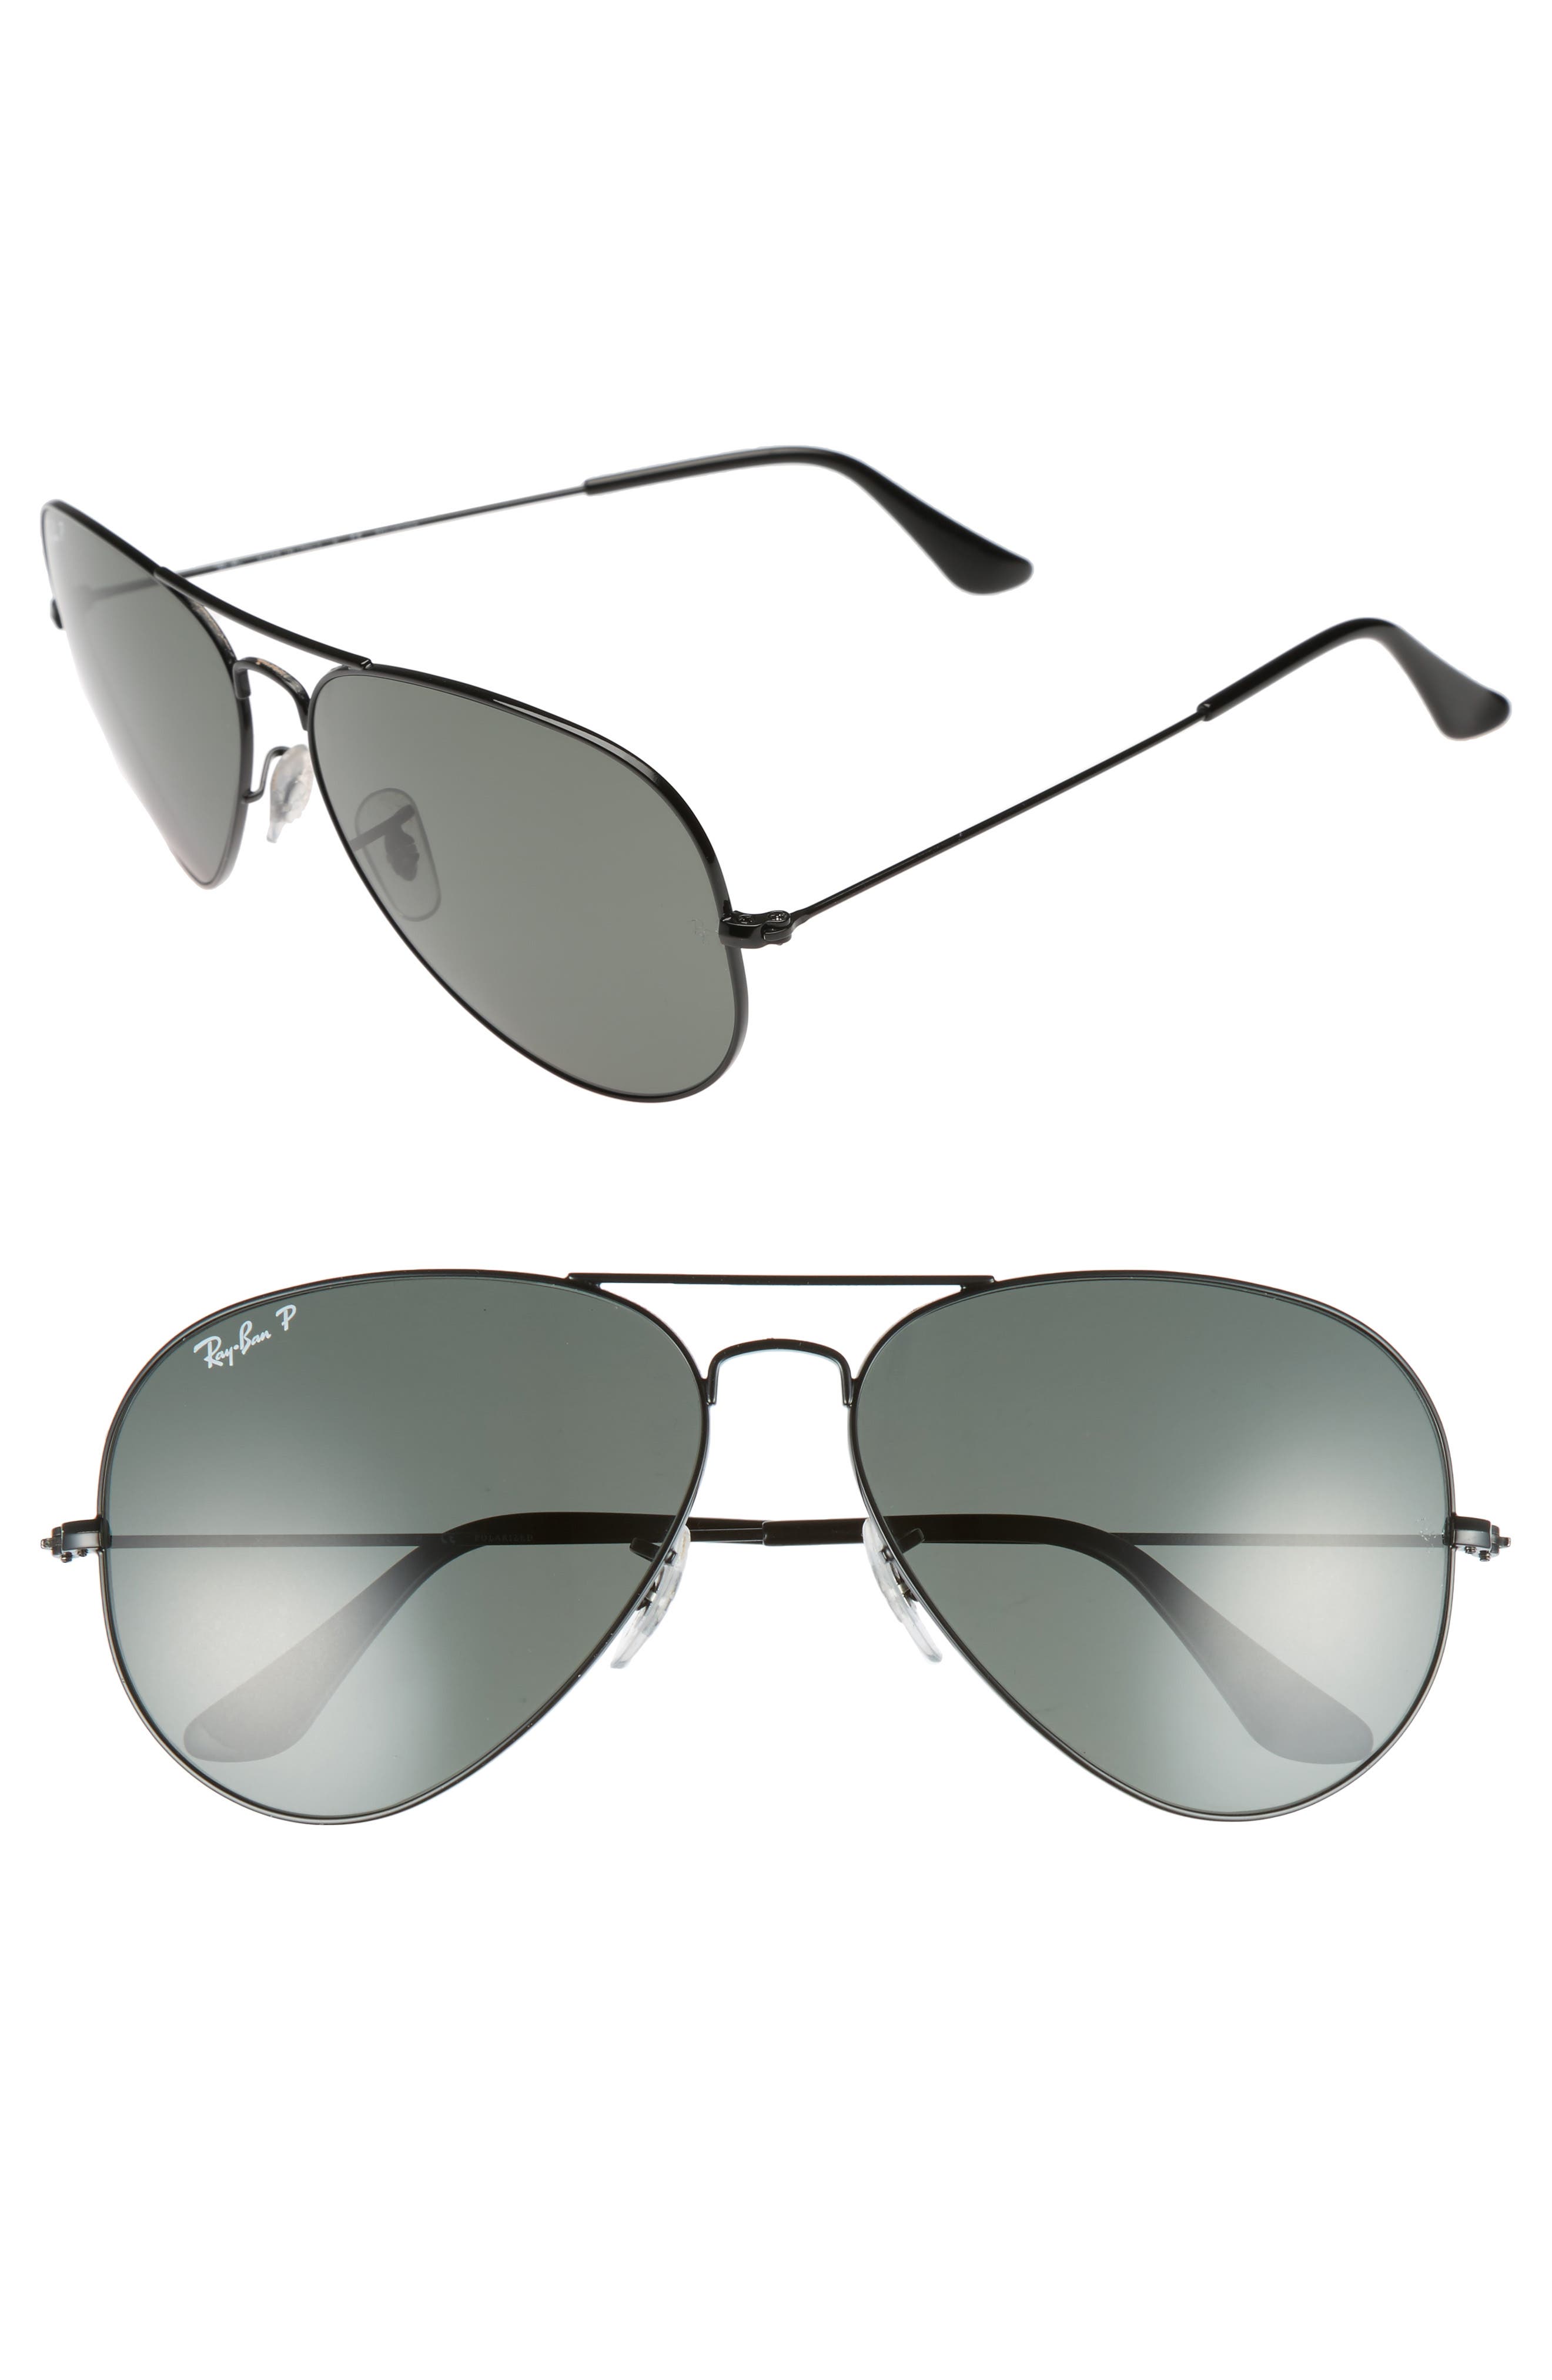 ray ban original aviator sunglasses